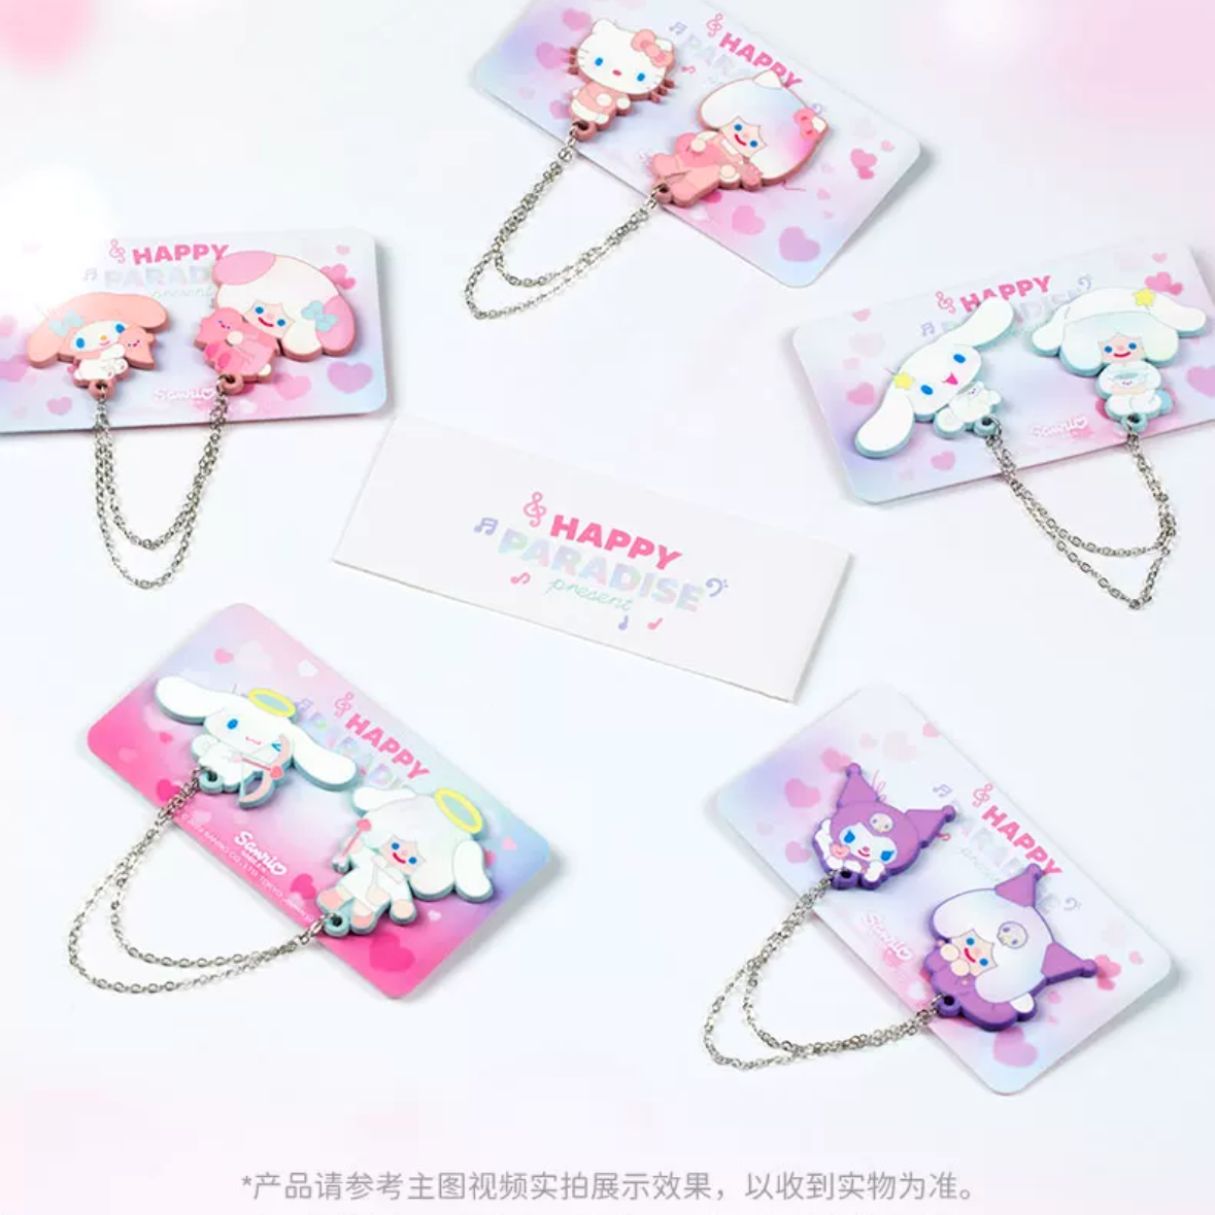 【New】 F.UN Rico X Sanrio Happy Paradise Present Series Magnet Badges